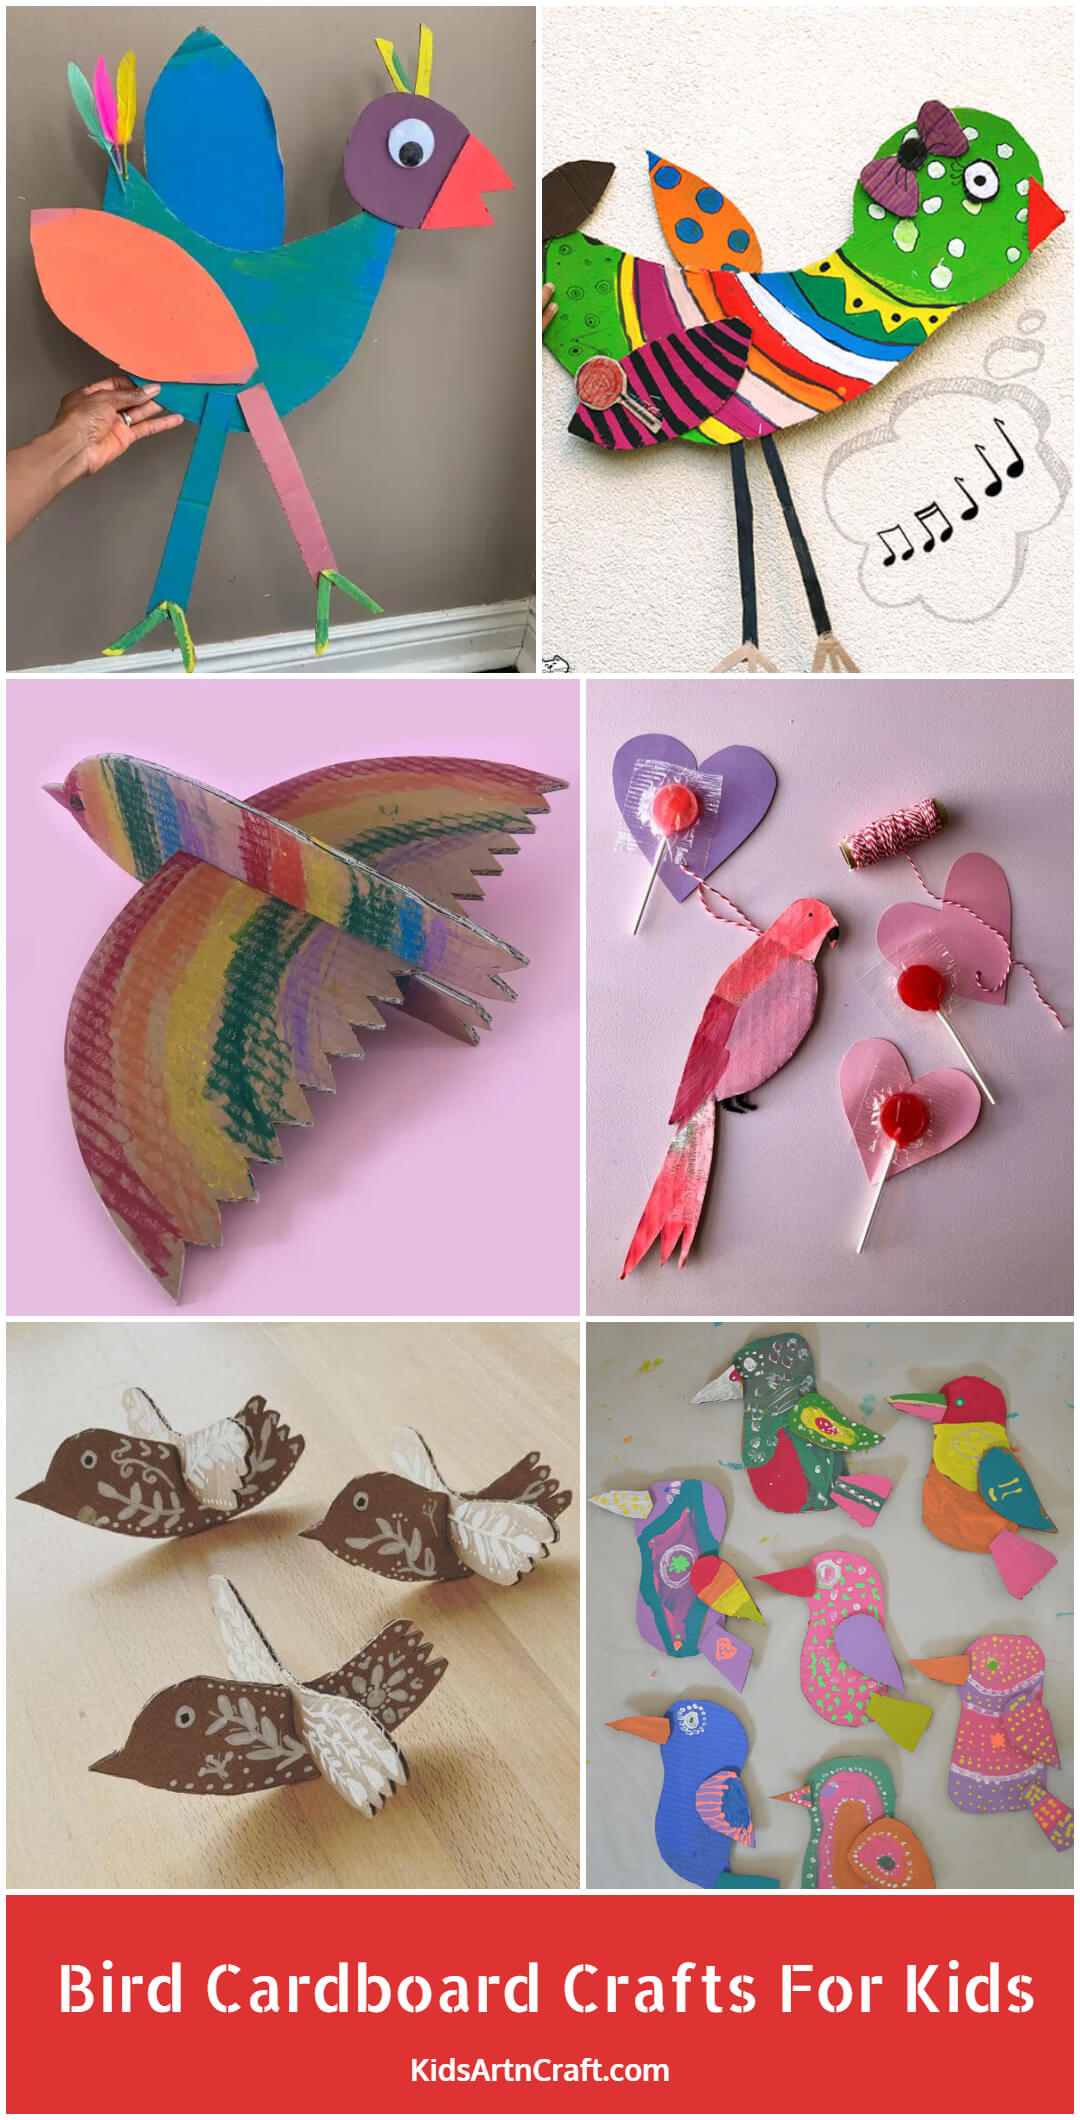 Bird Cardboard Crafts for Kids